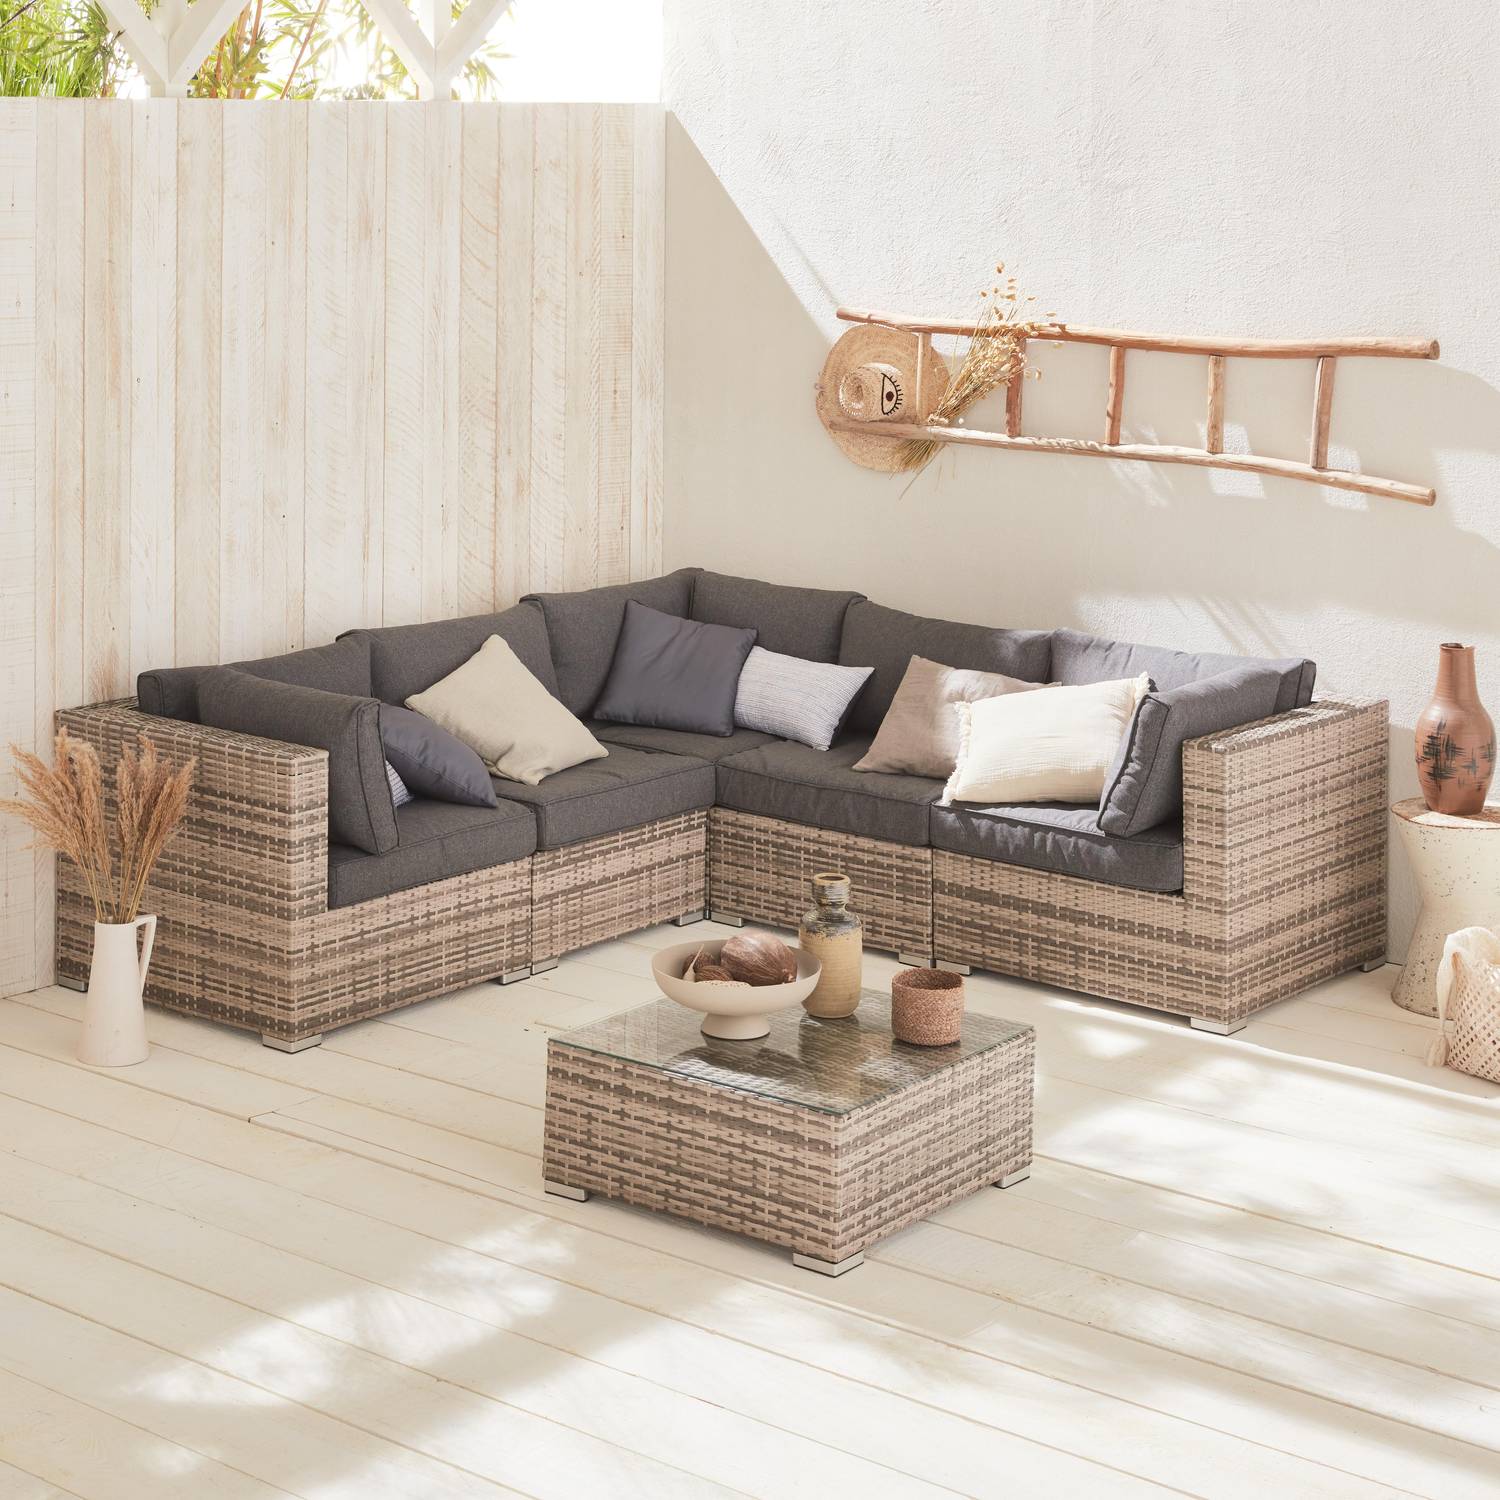 Ready assembled 5-seater polyrattan corner garden sofa set - sofa, coffee table - Napoli - Mixed Grey rattan, Grey cushions Photo1